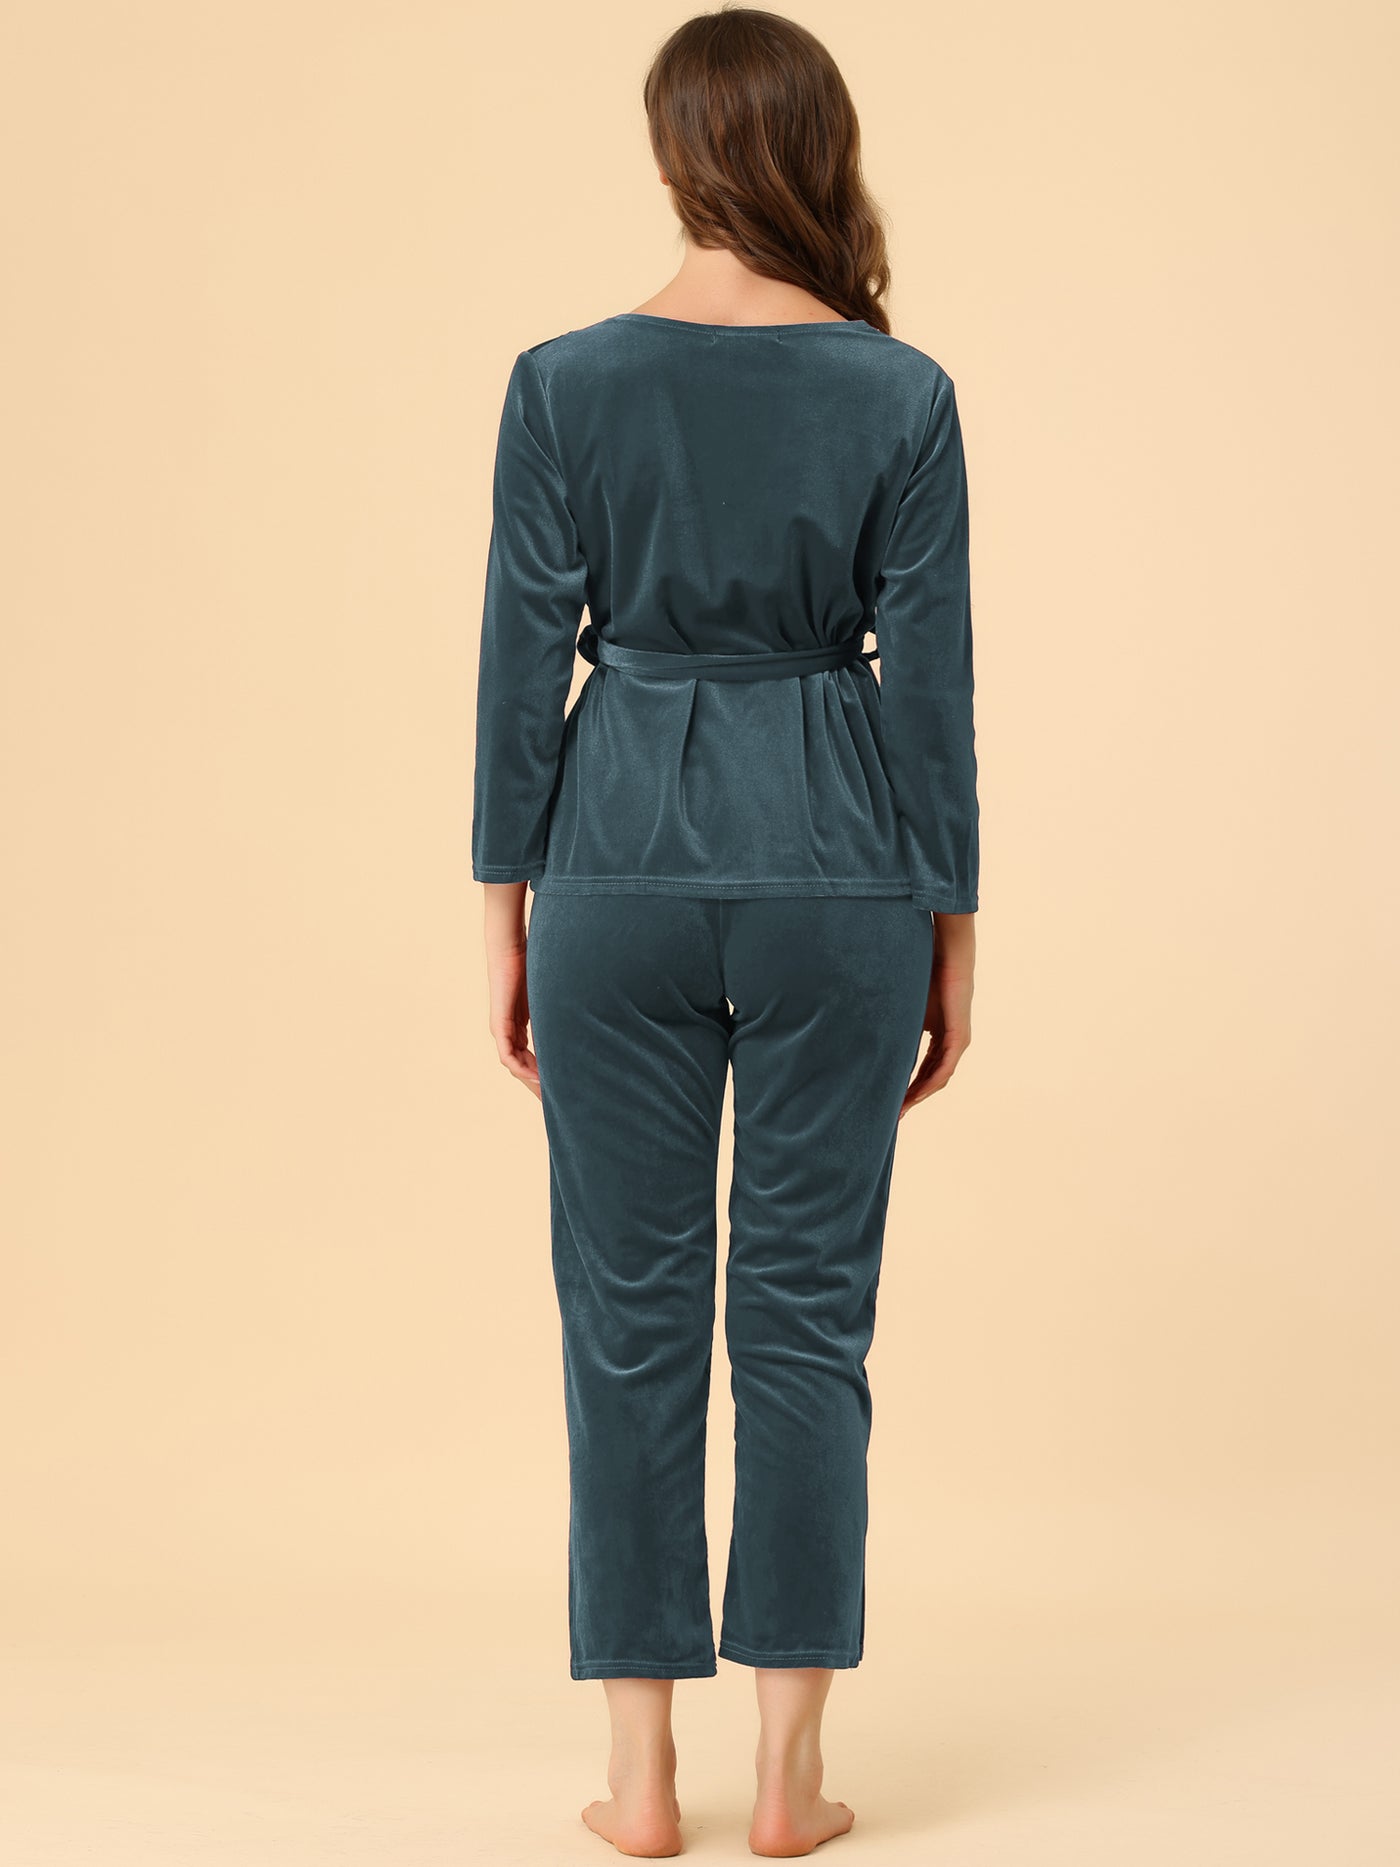 Allegra K Velvet Sleepwear Pajama V-Neck Lace Night Suit with Belted Lounge Set